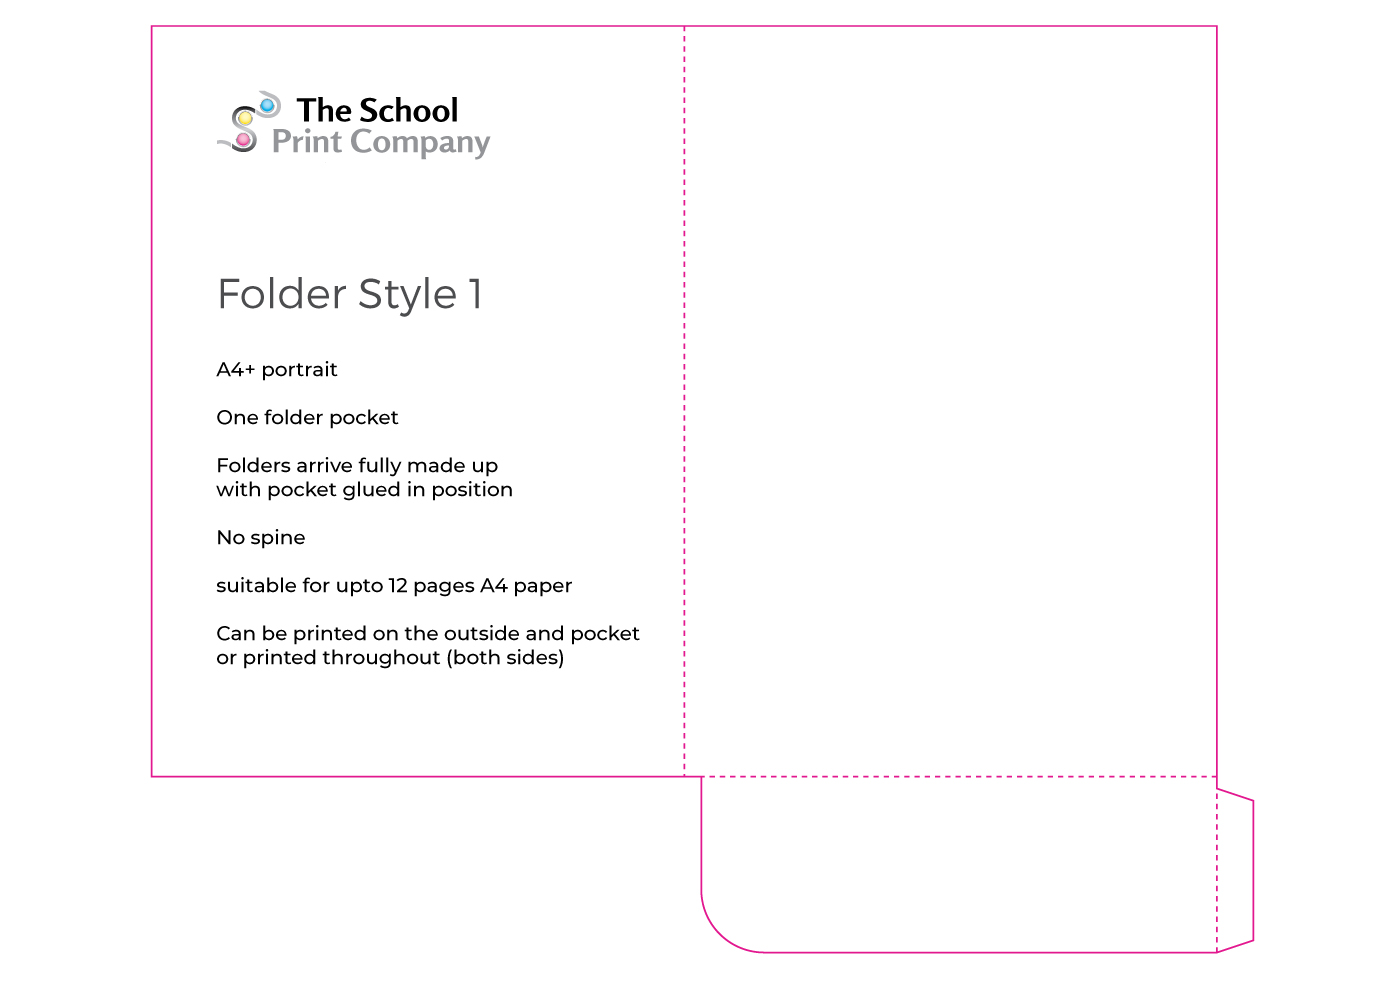 Folder Style 1